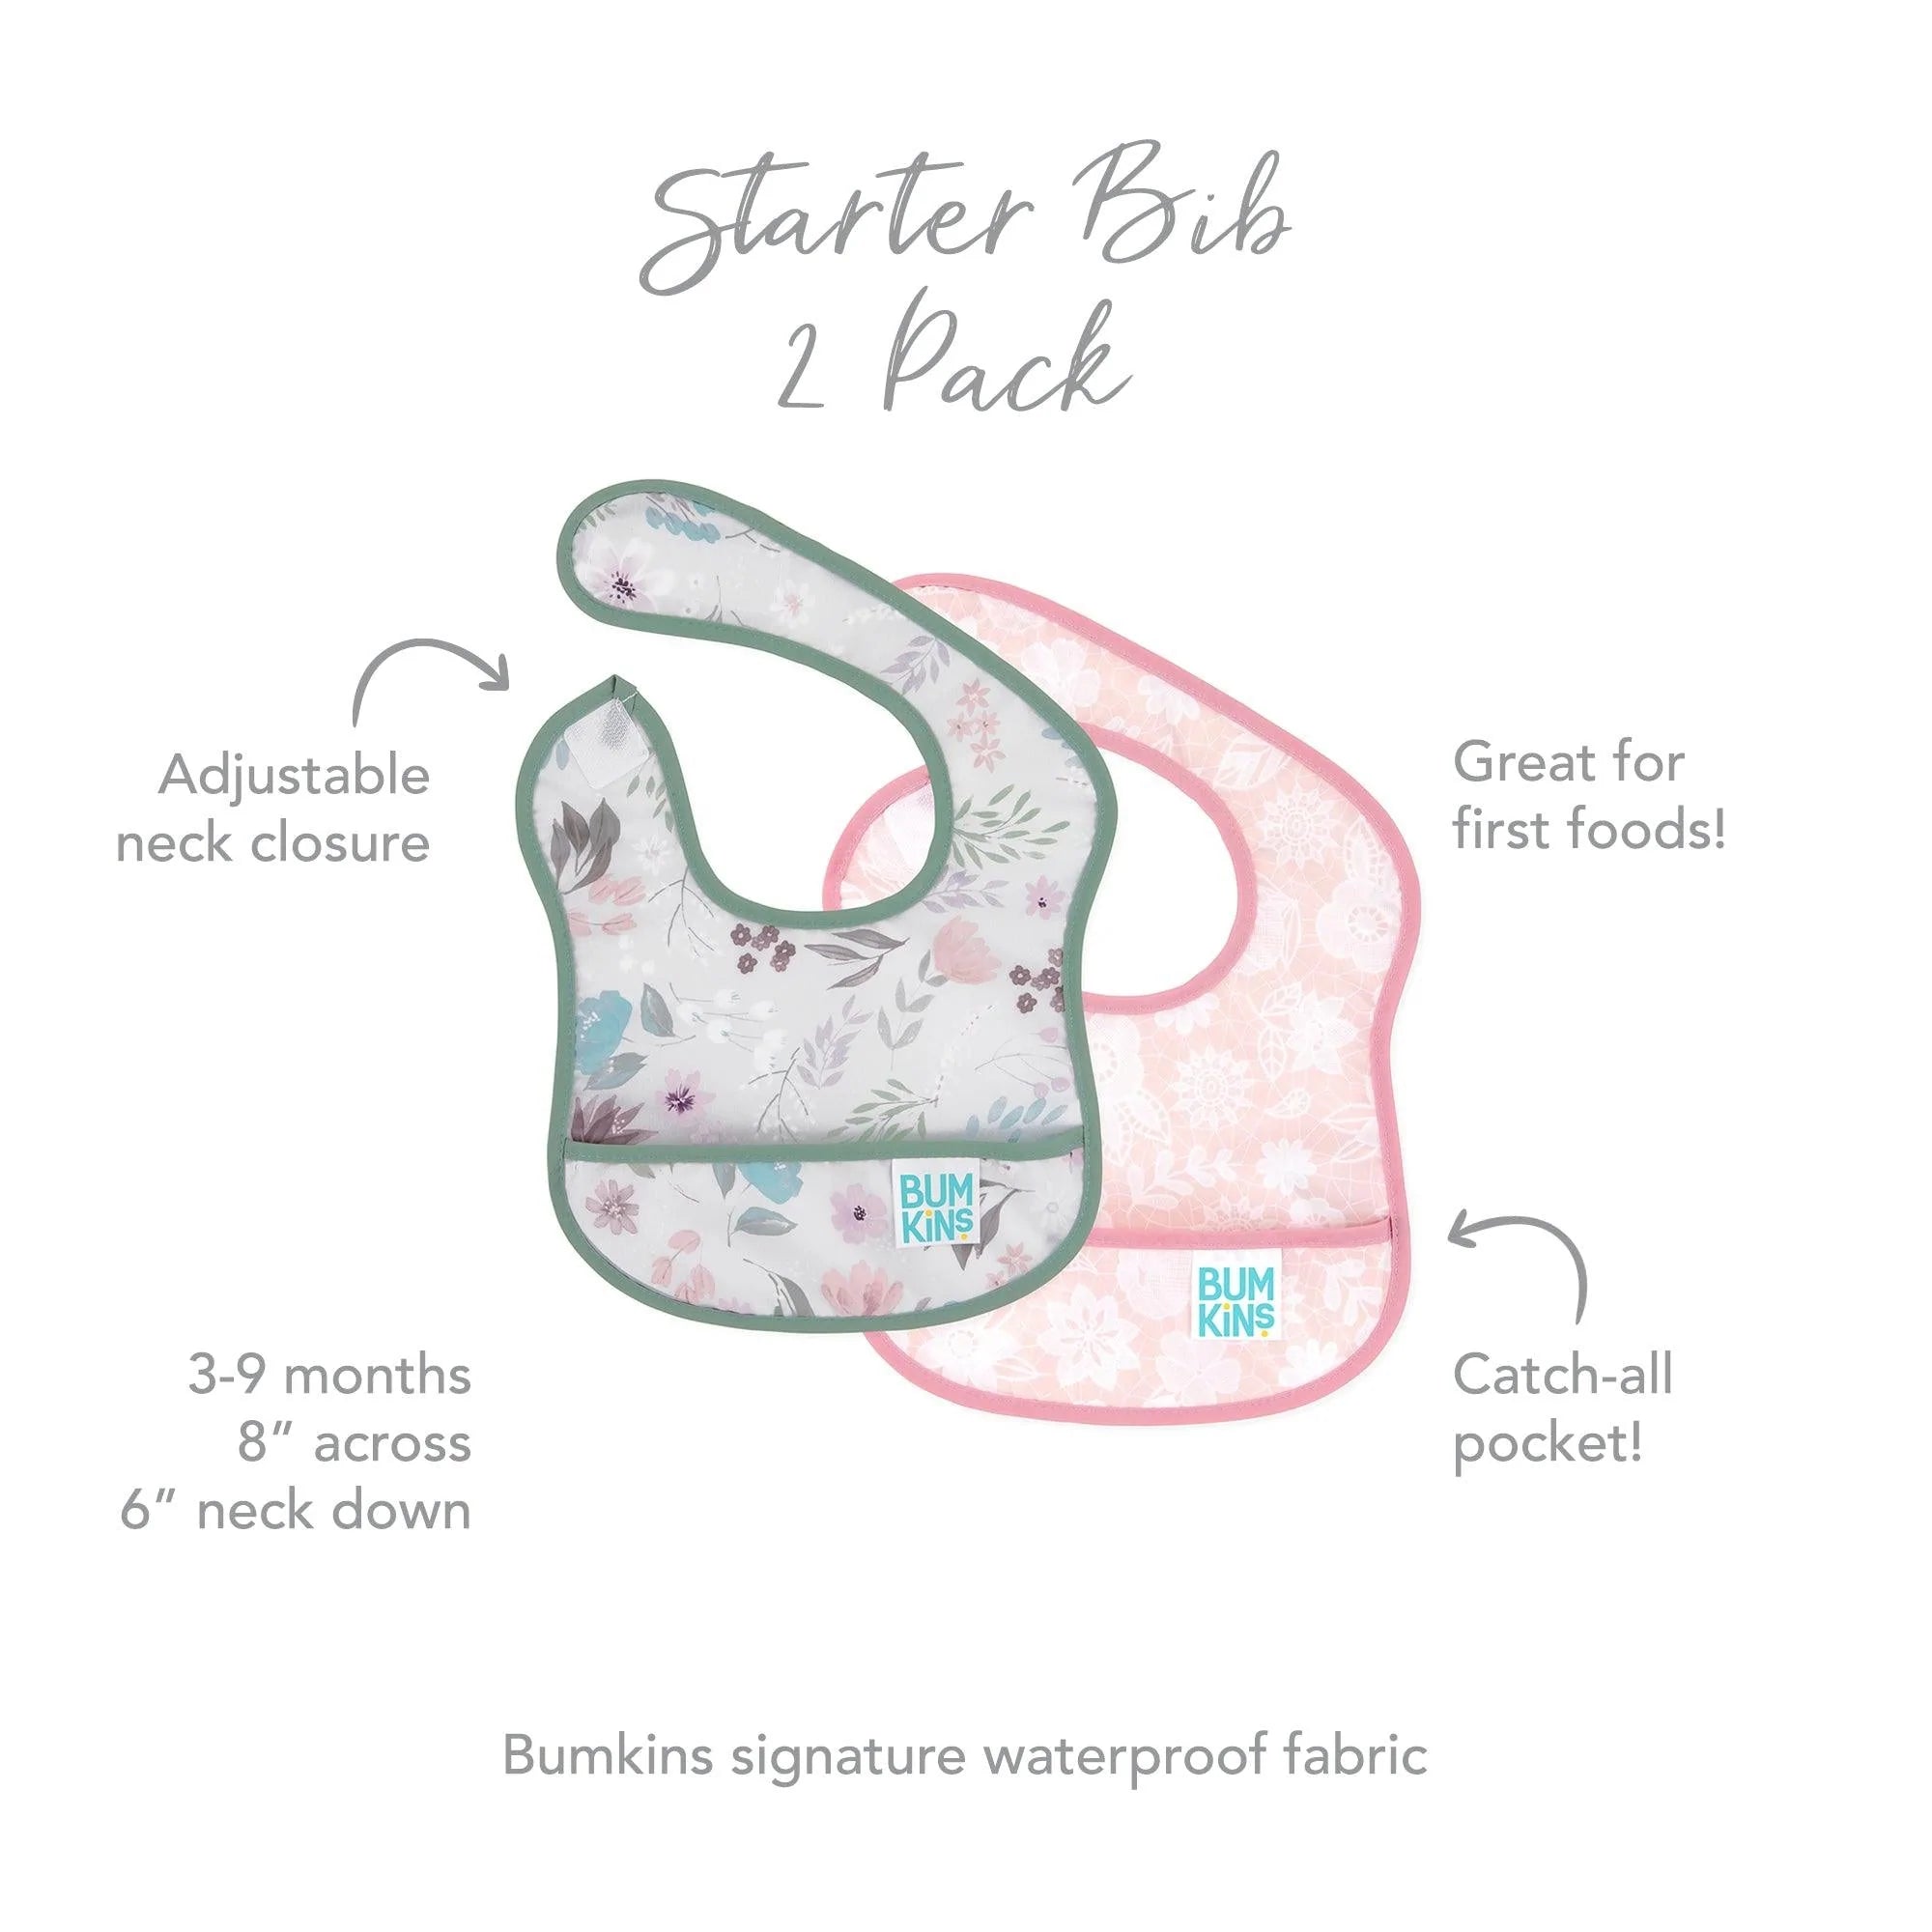 Starter Bib 2 Pack: Floral & Lace - Bumkins